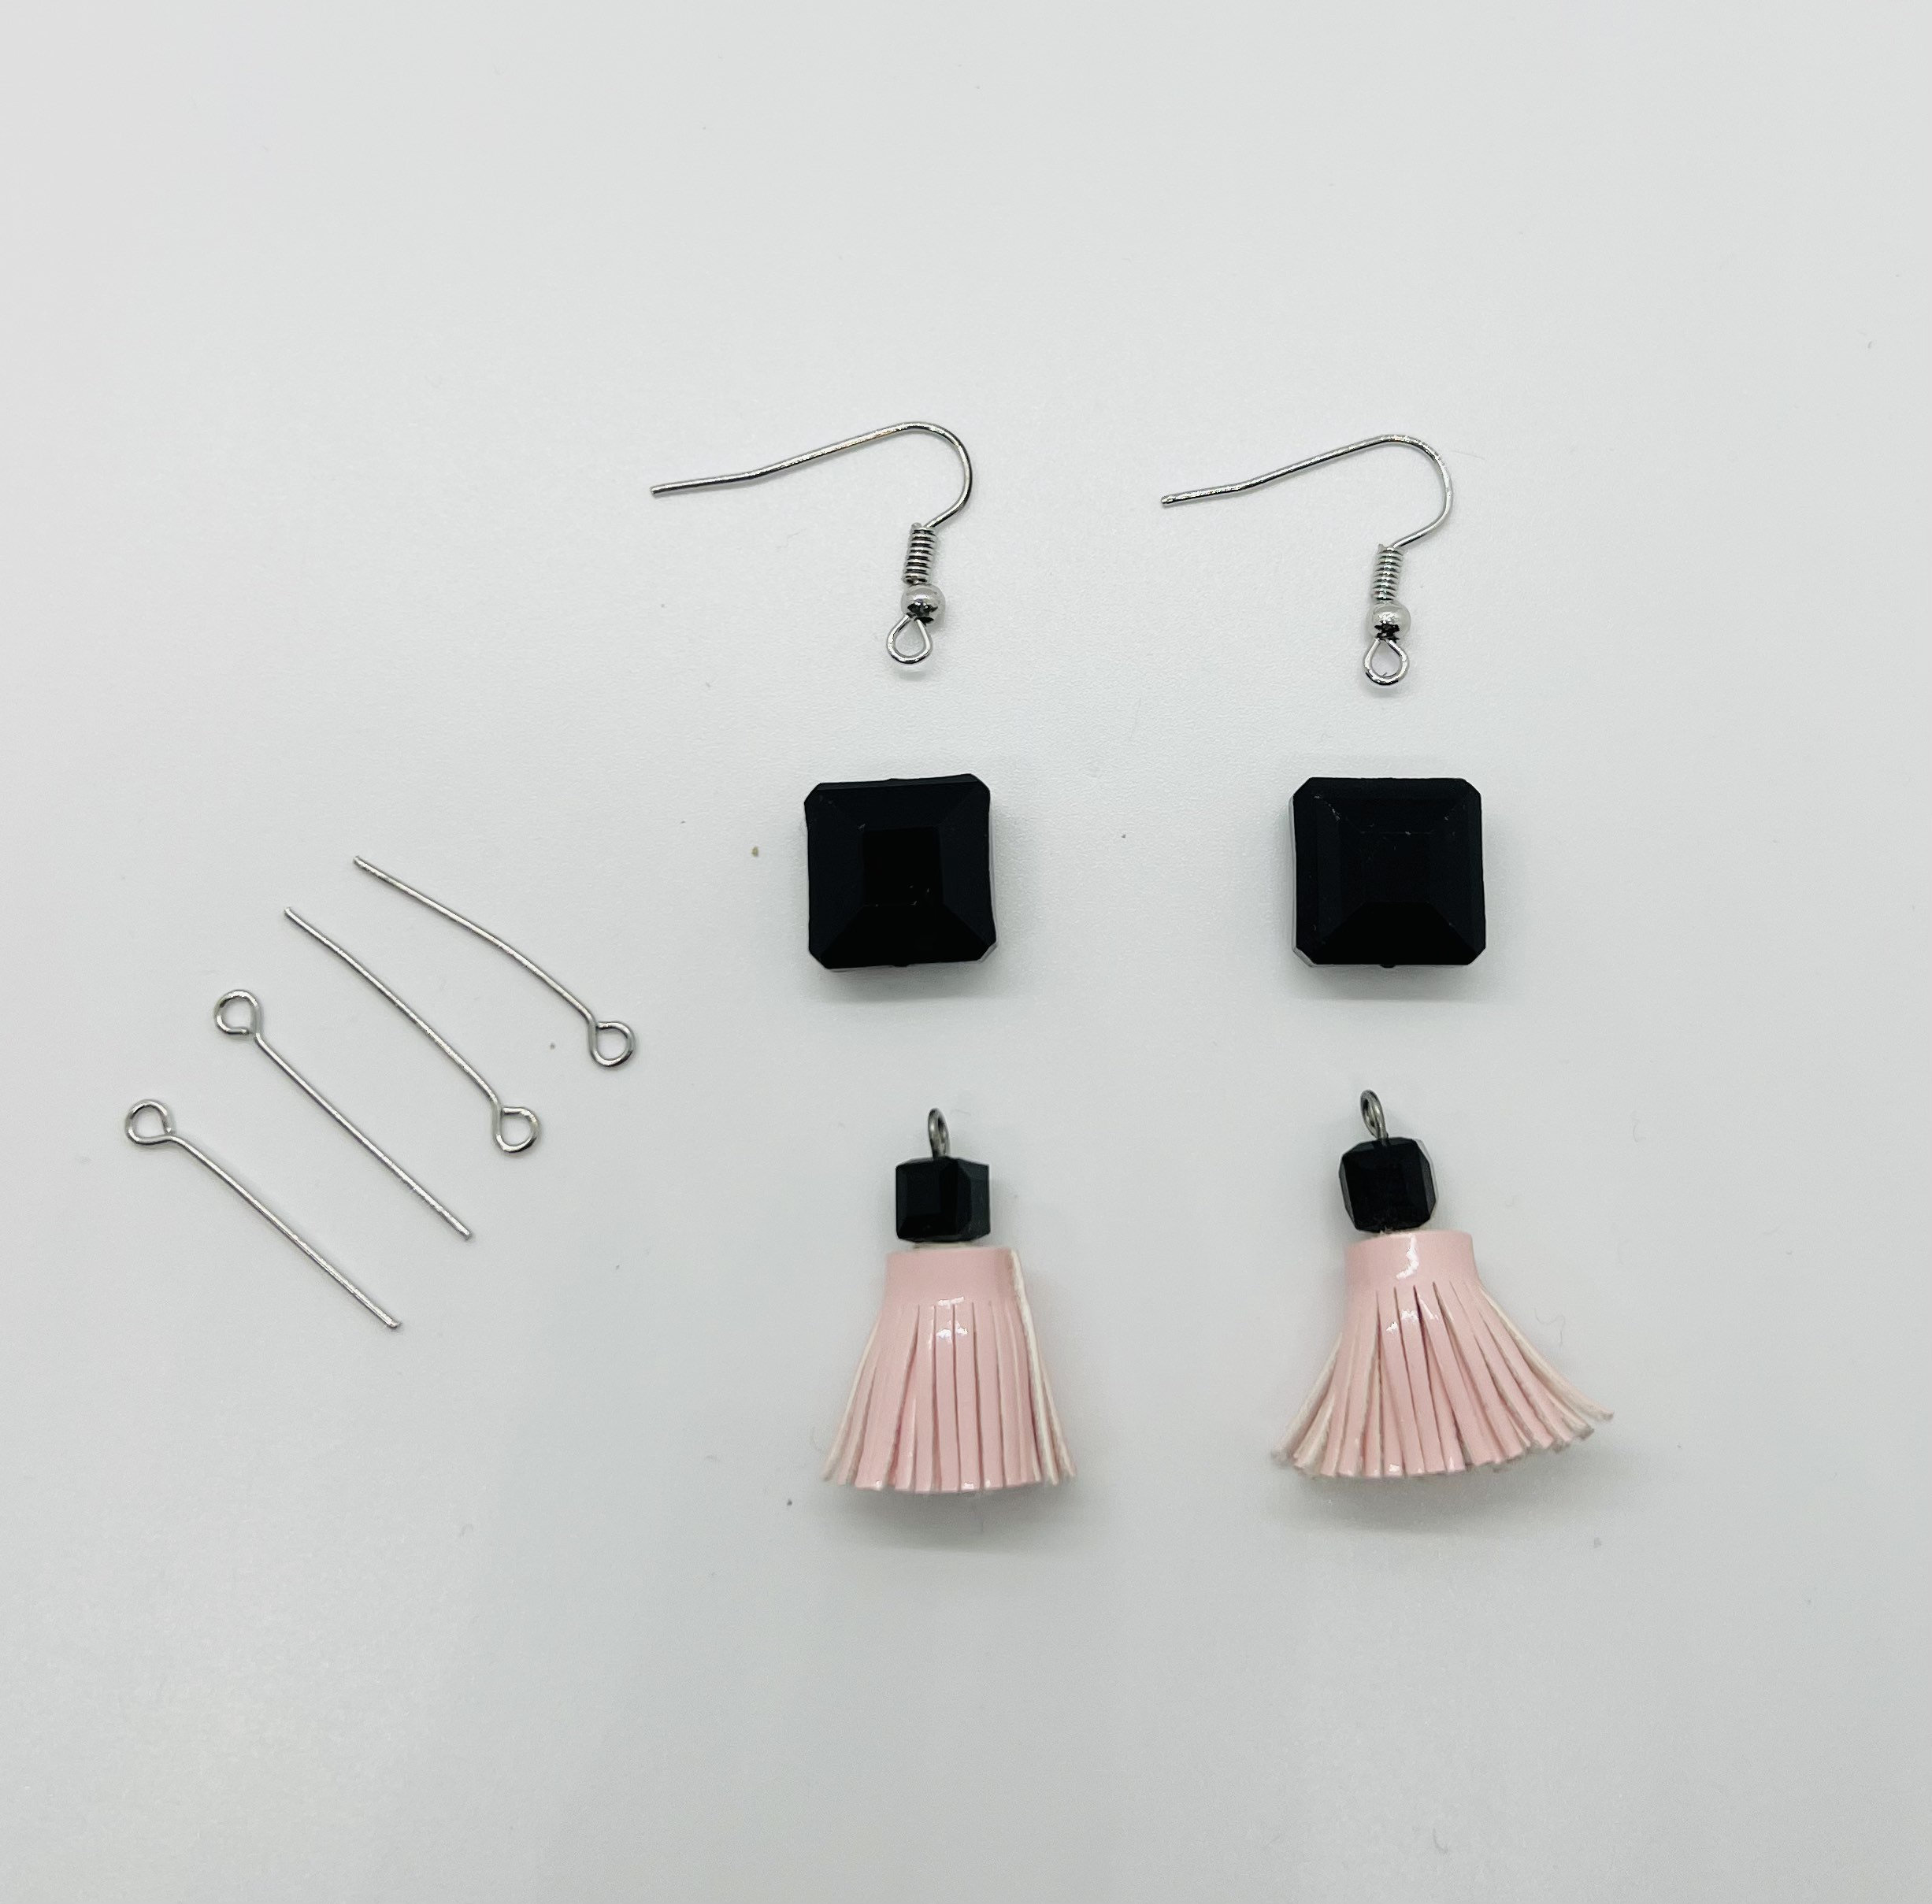 Beginner DIY Earring Kit,jewelry Making Kit, 10 Pairs of Earrings Craft  Supplies, Unicorn Charm, Flower/star/ 